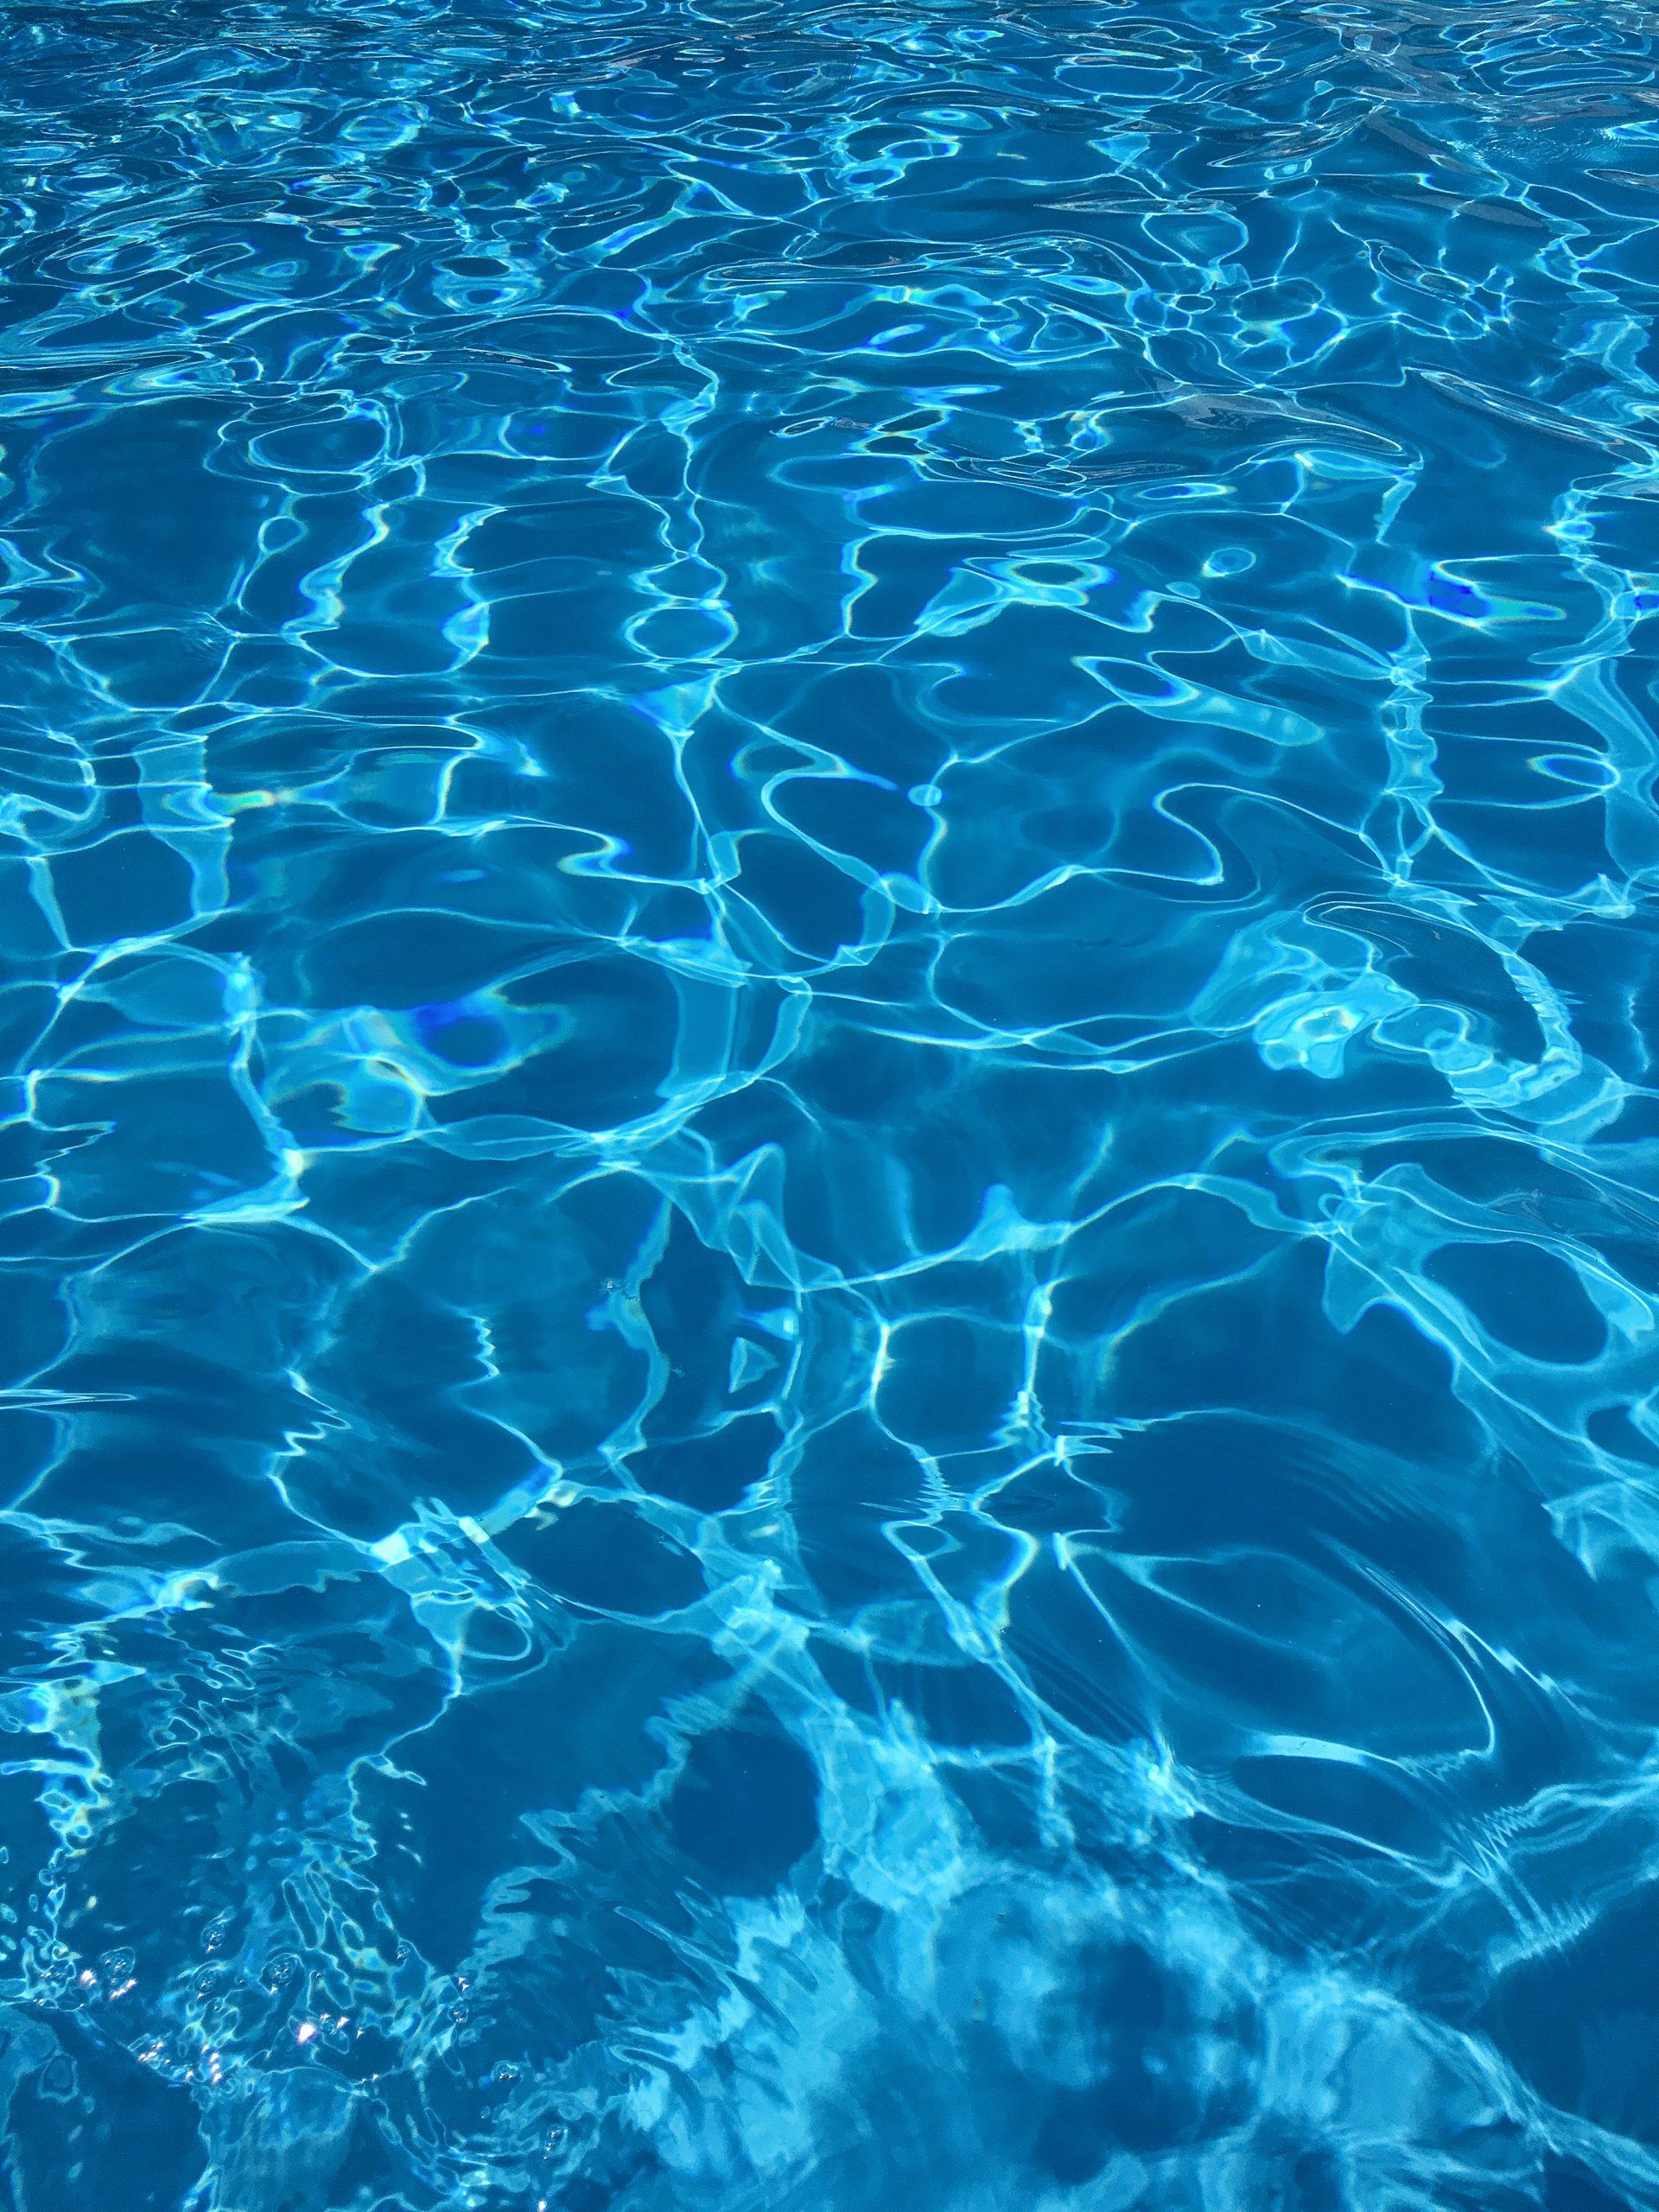 Calm pool water